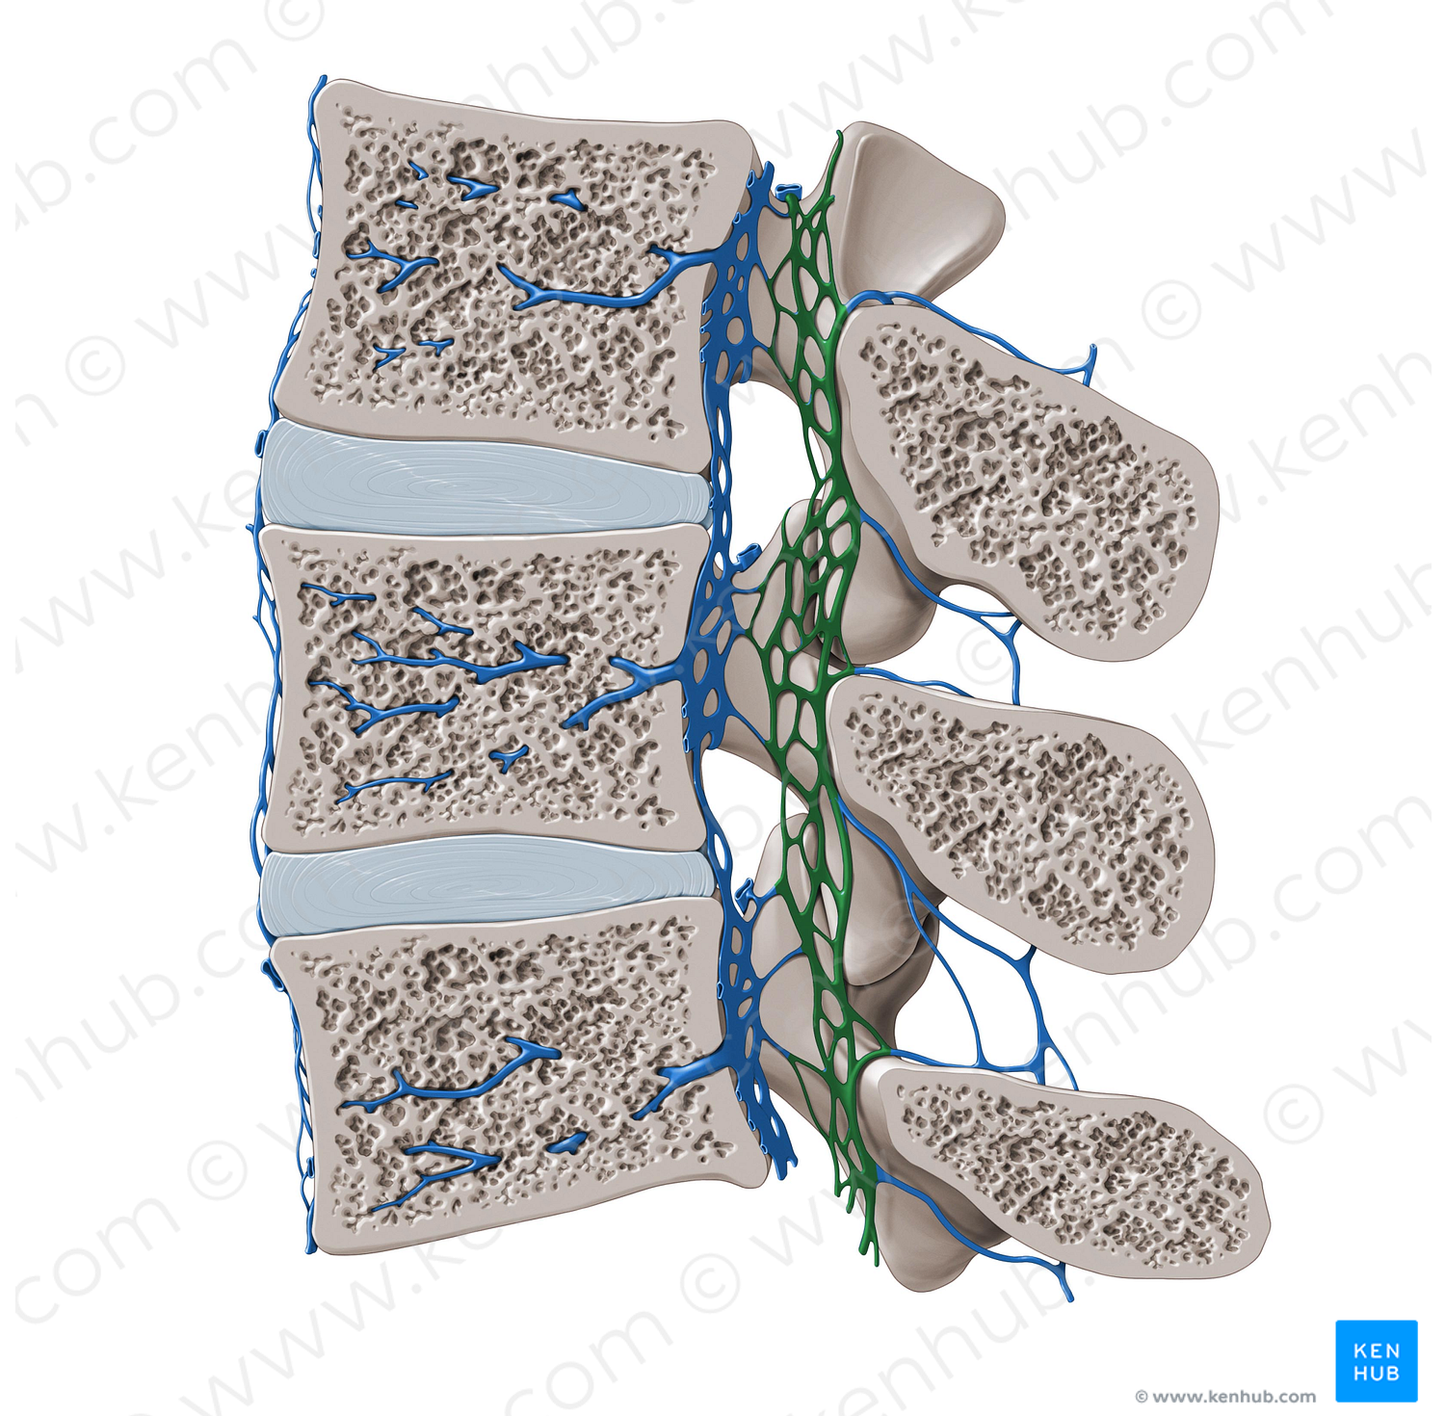 Posterior internal vertebral venous plexus (#8060)